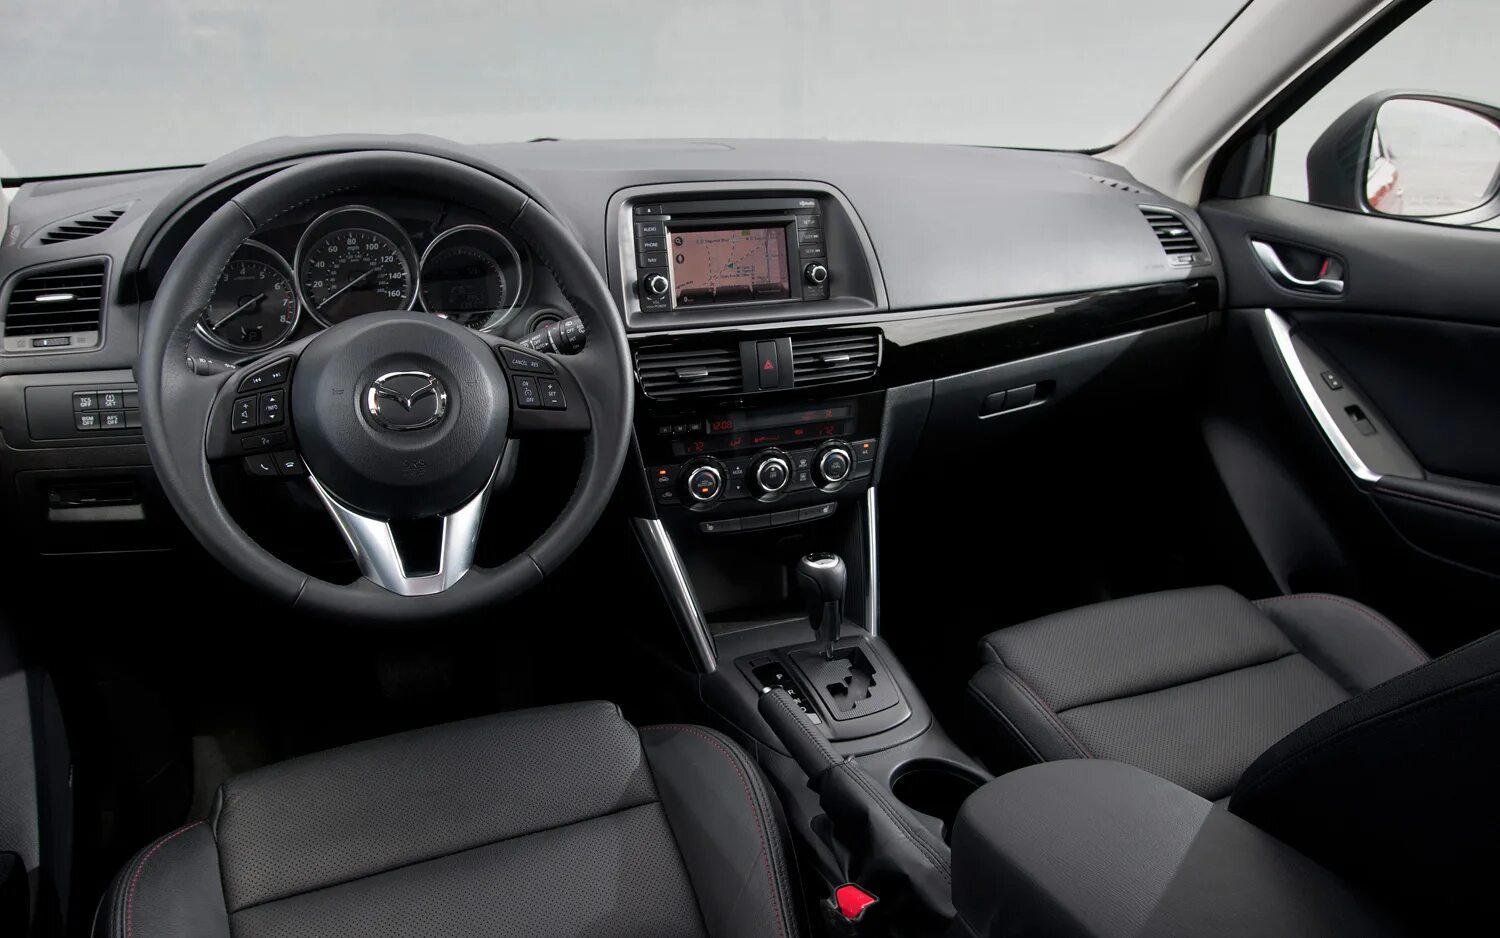 Сх 5 механика. Mazda cx5 Interior. Мазда СХ 5 салон. Мазда cx5 2012 салон. Мазда CX 5 интерьер.